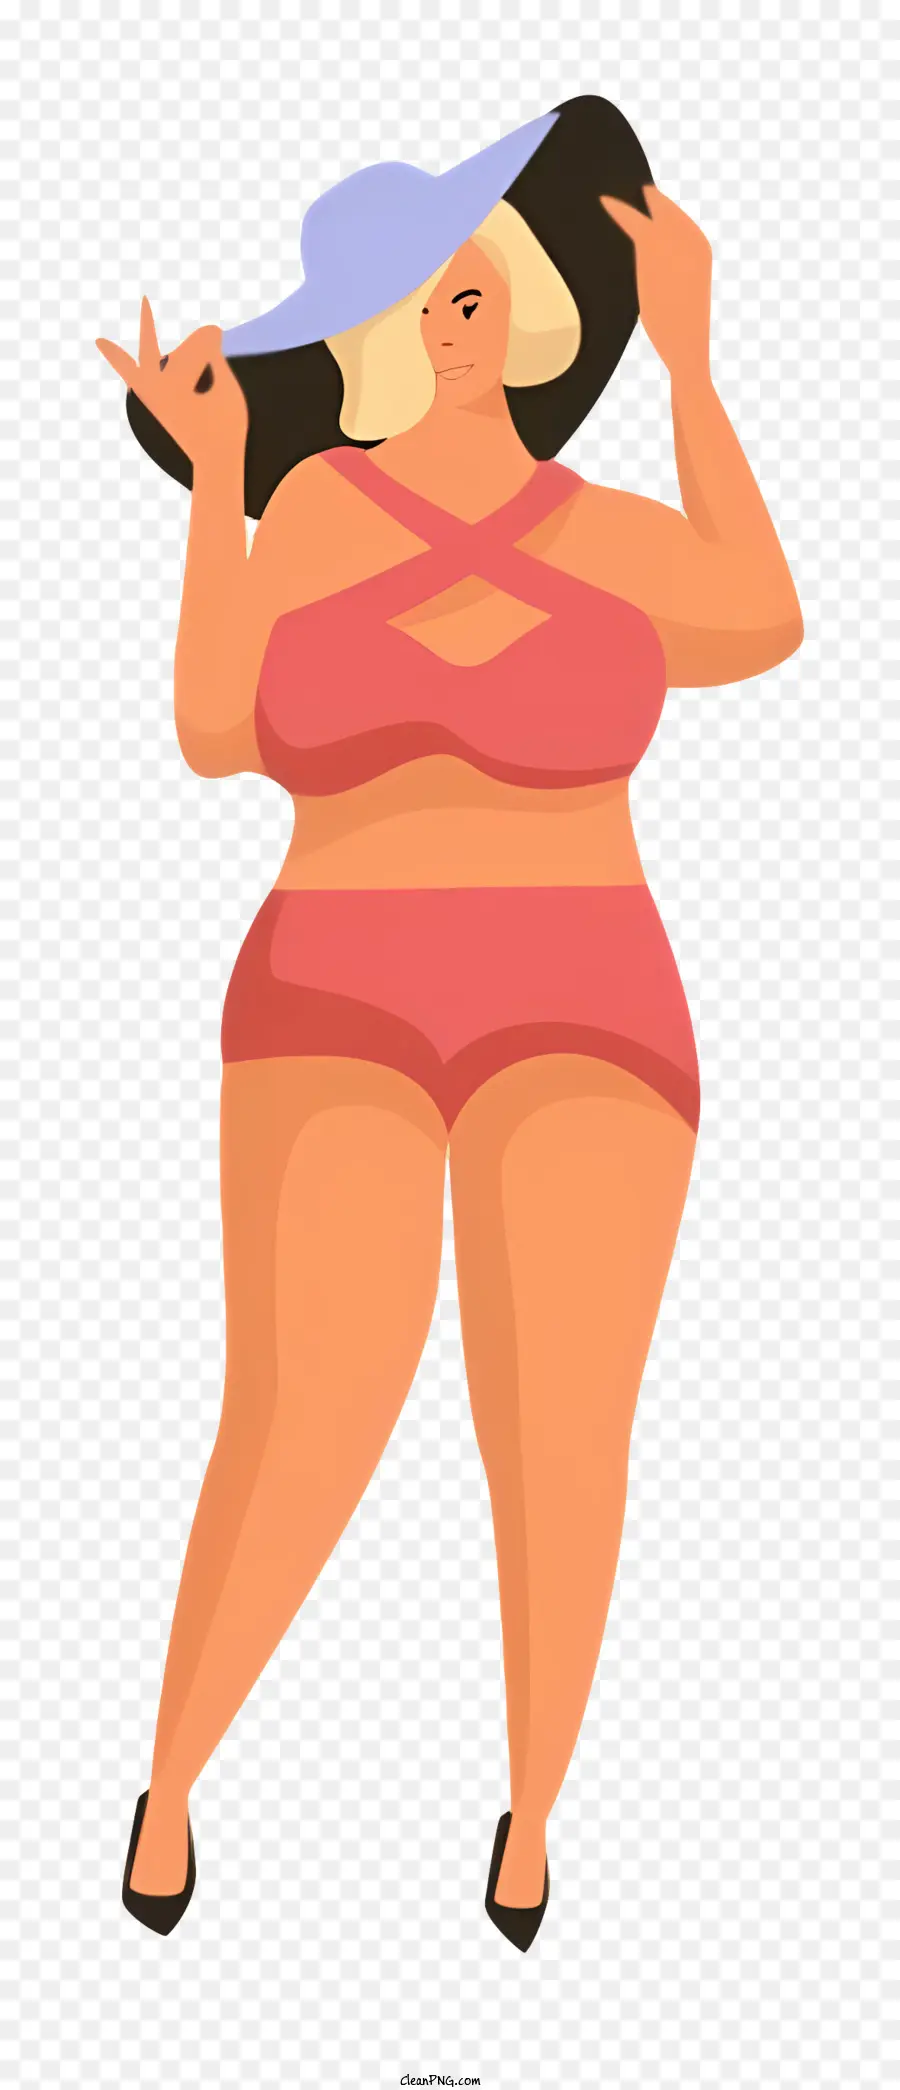 fat body cartoon woman pink bikini pink hat arms raised